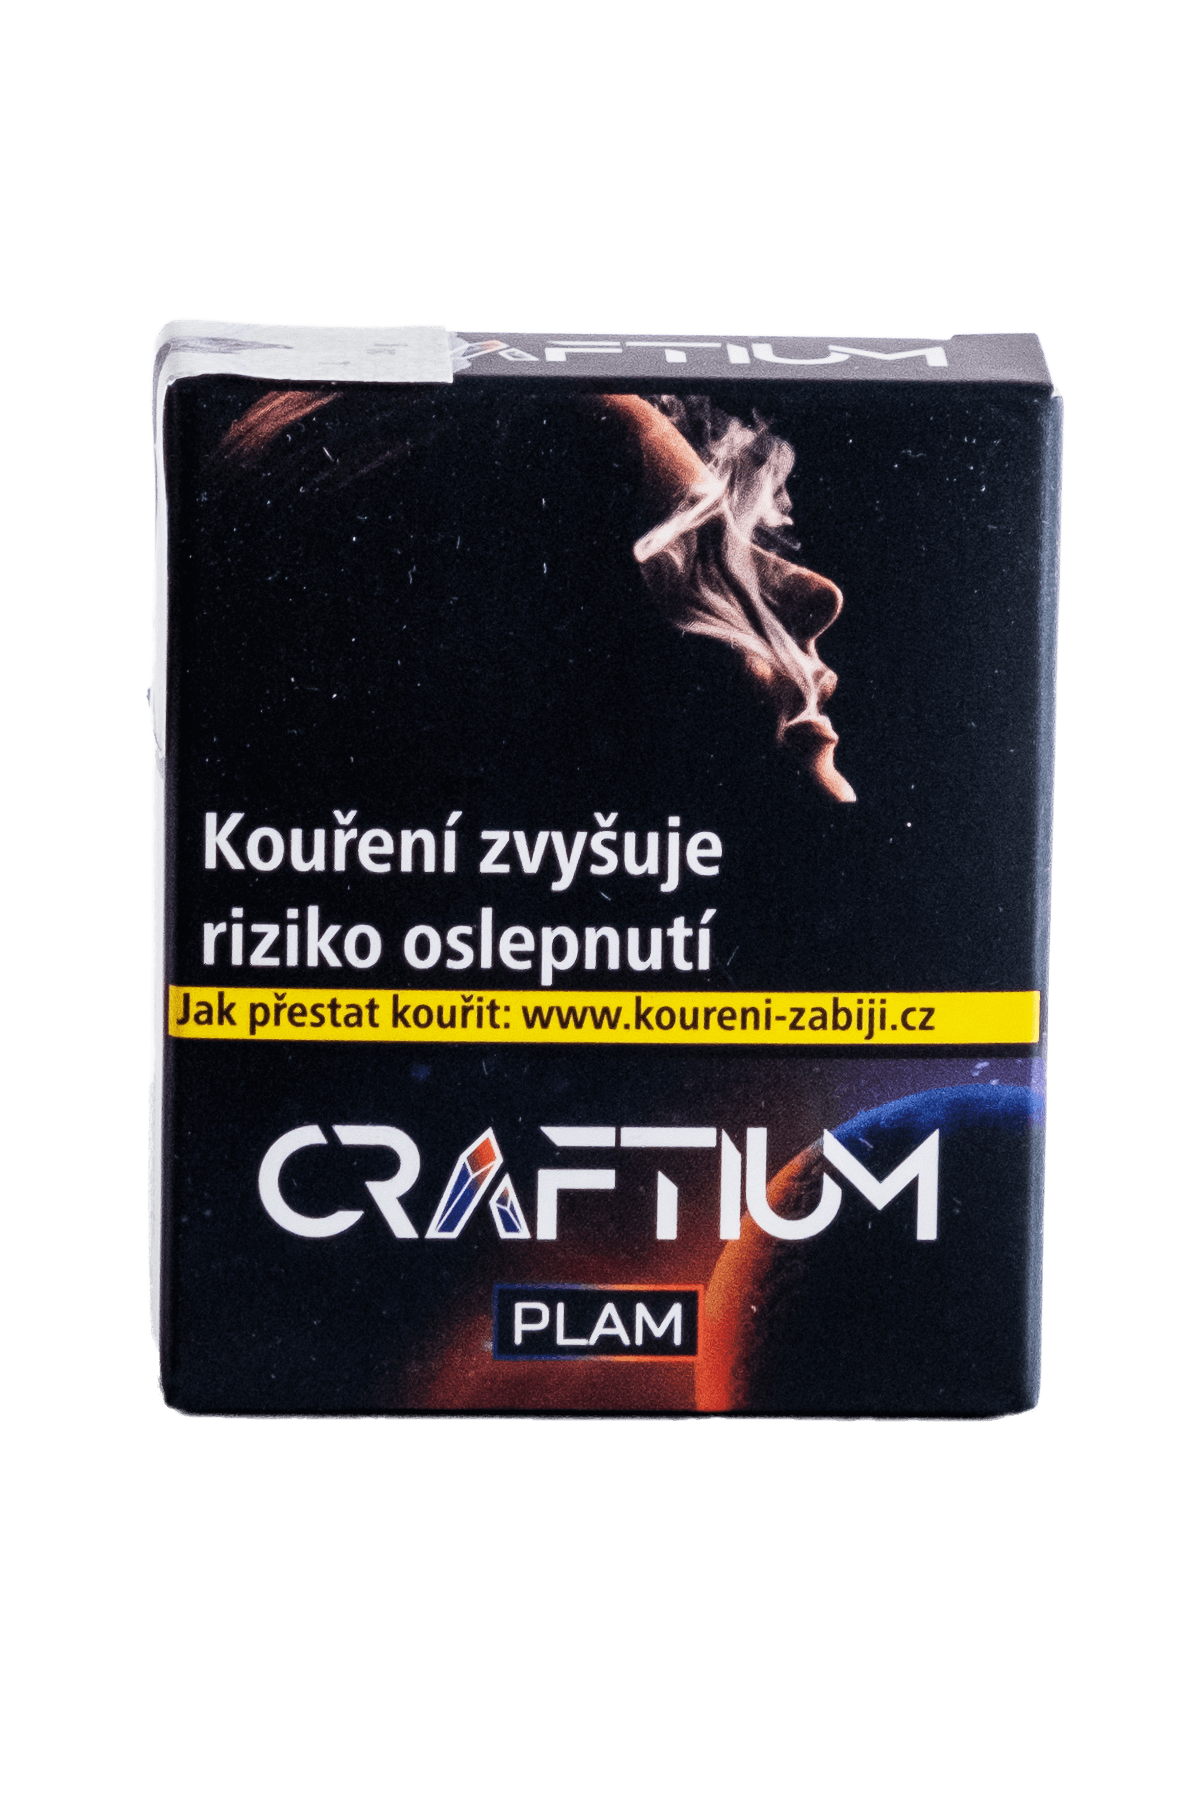 Tabák - Craftium 20g - Plam